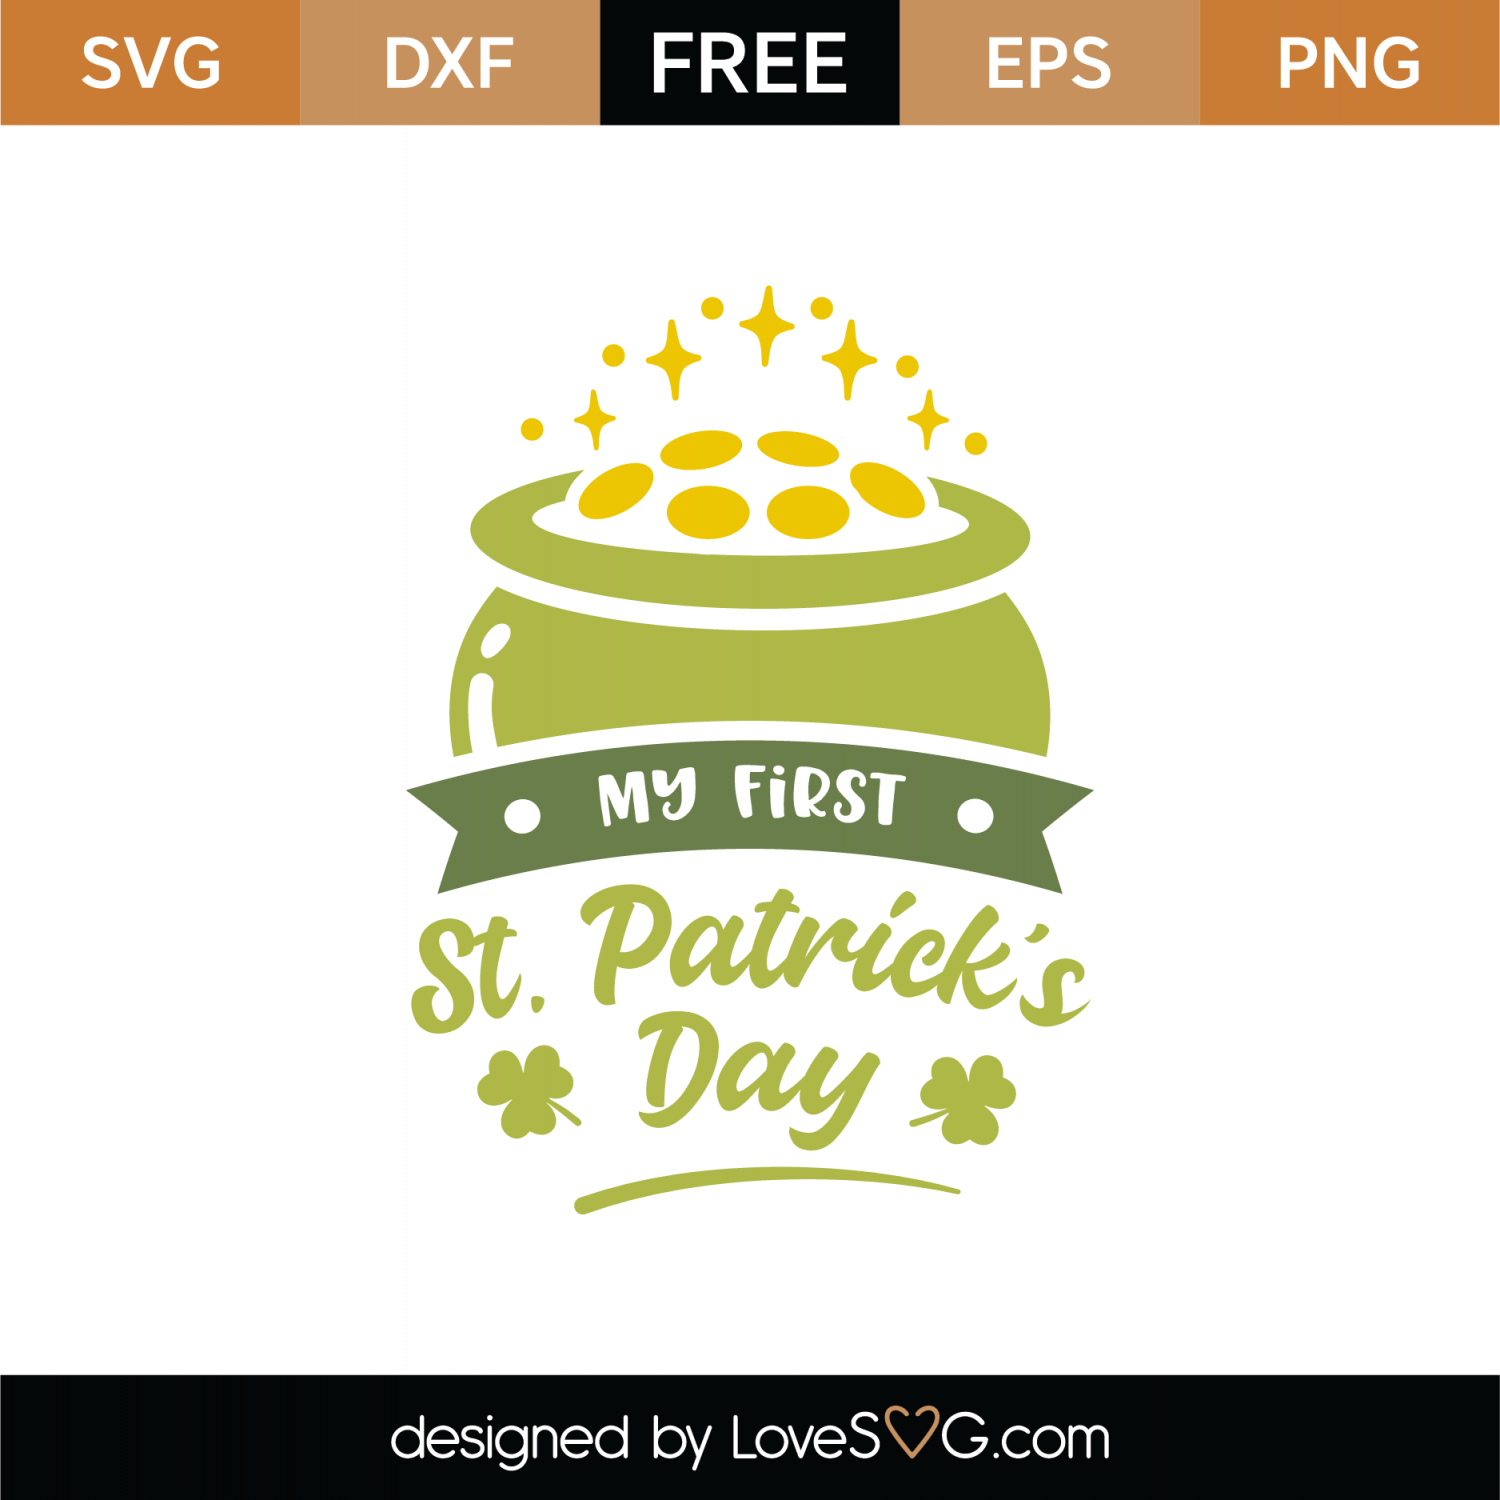 Download Free Happy St Patrick's Day SVG Cut File | Lovesvg.com